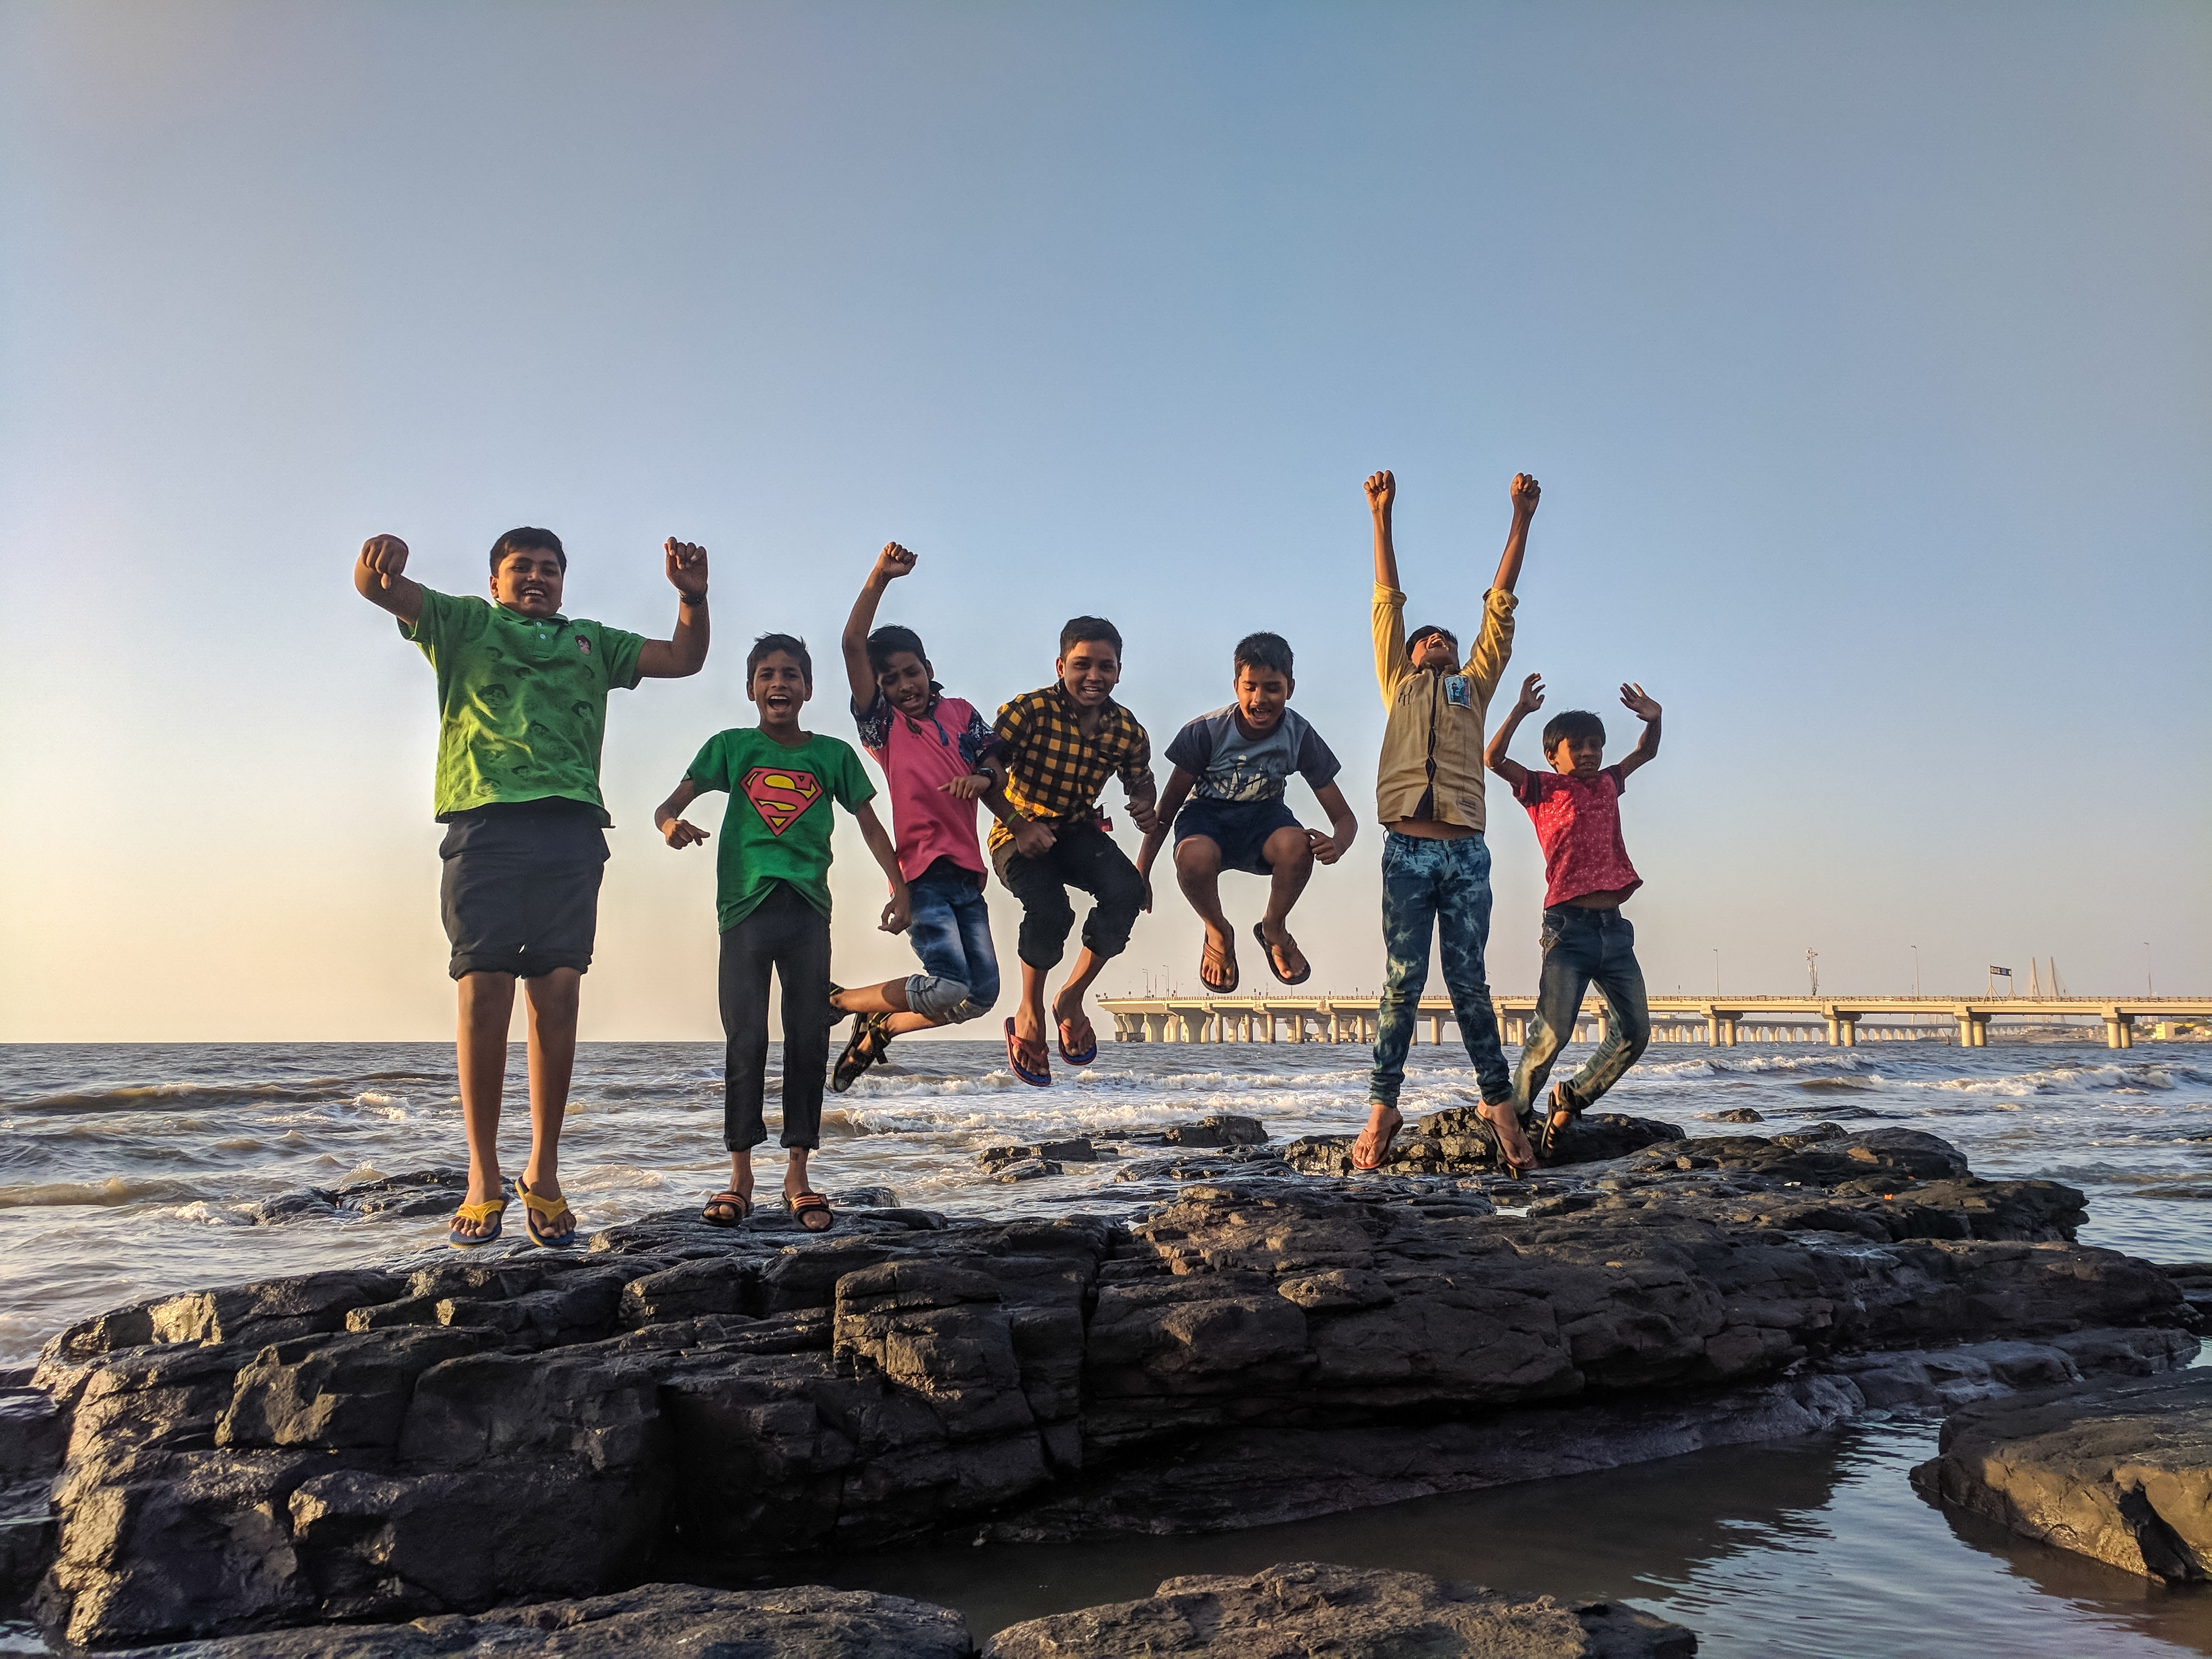 Boy wearing green crew-neck shirt jumping from black stone on seashore photo